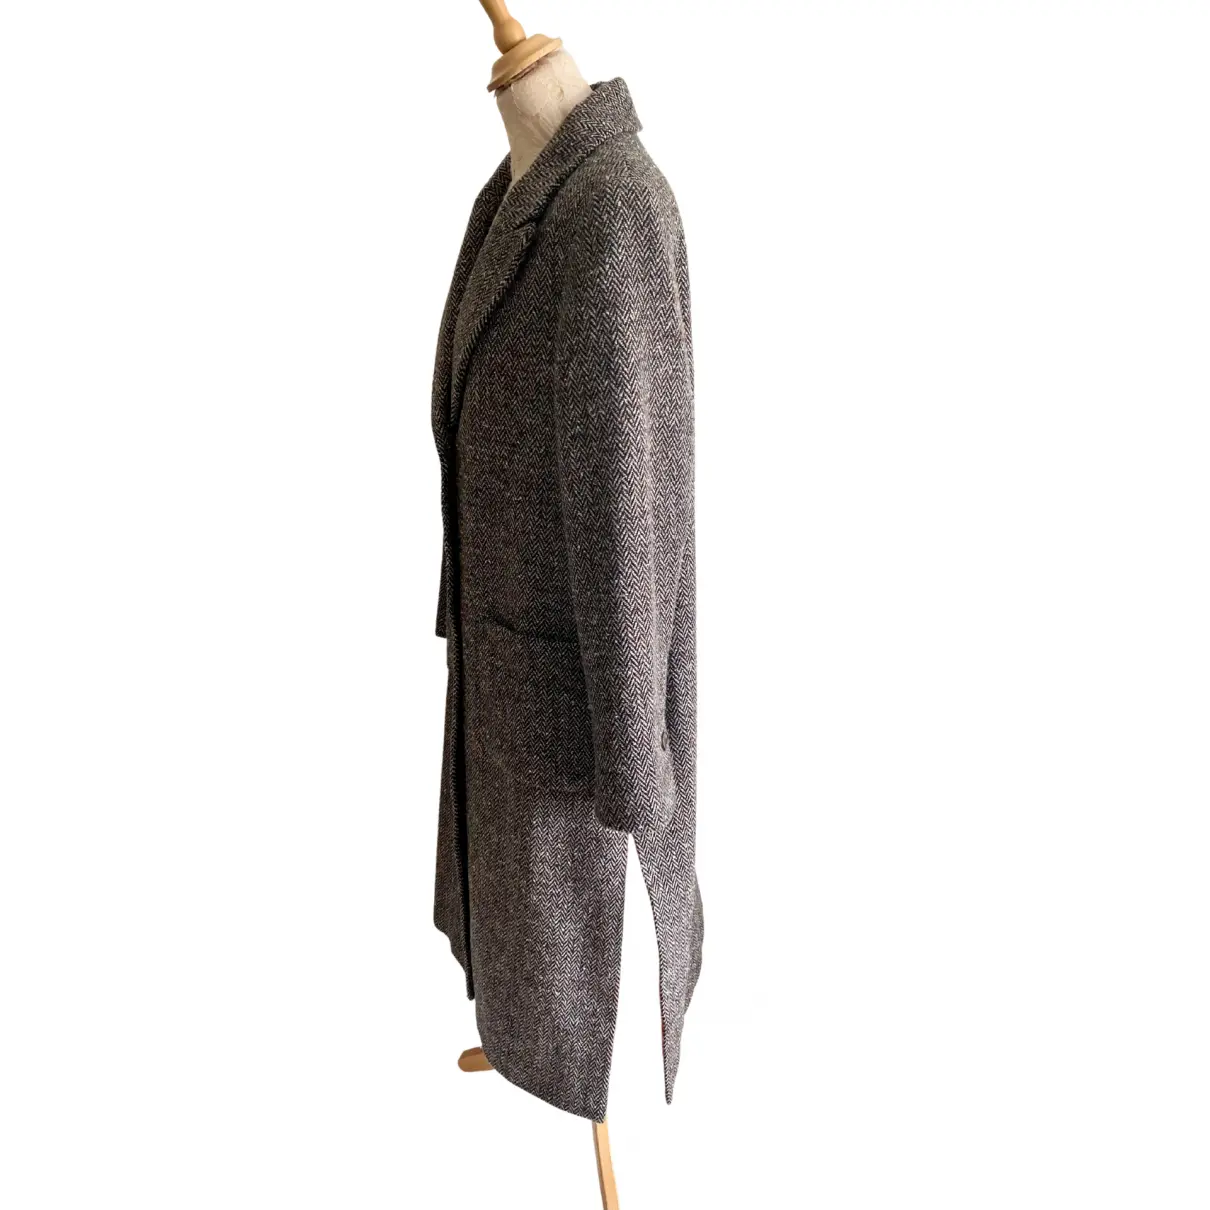 Buy Anthropologie Wool coat online